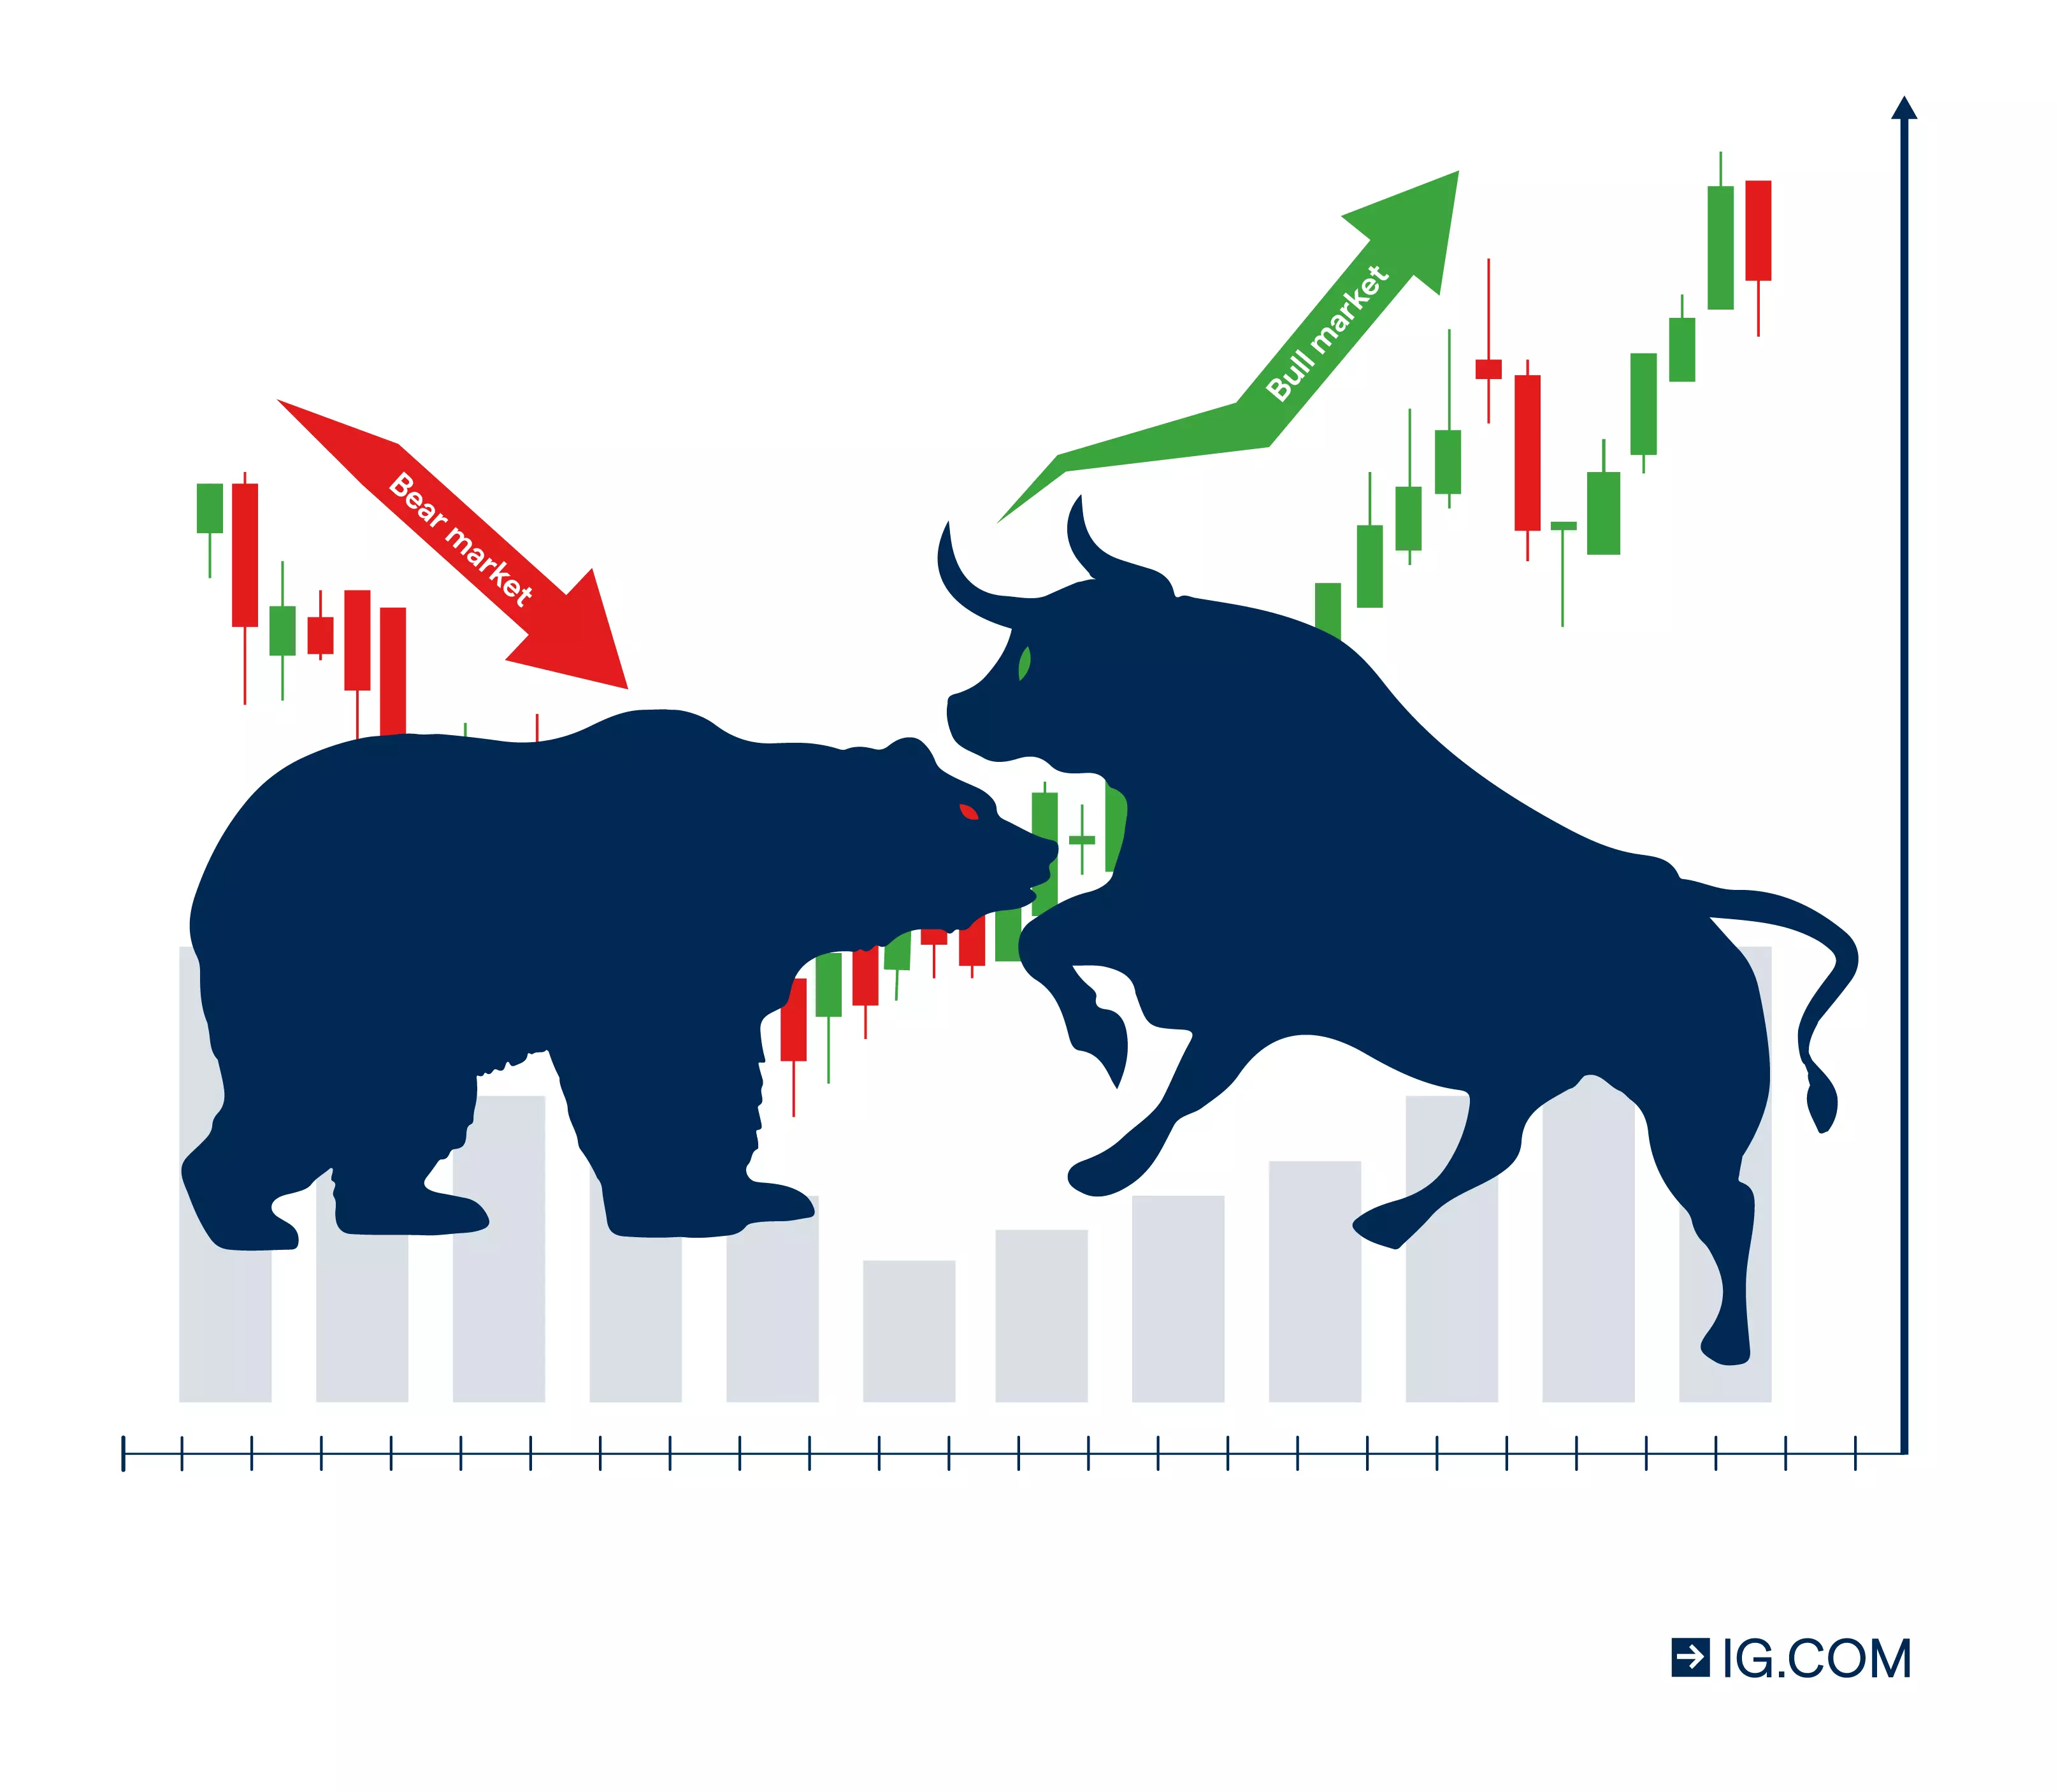 Bull market - bear market